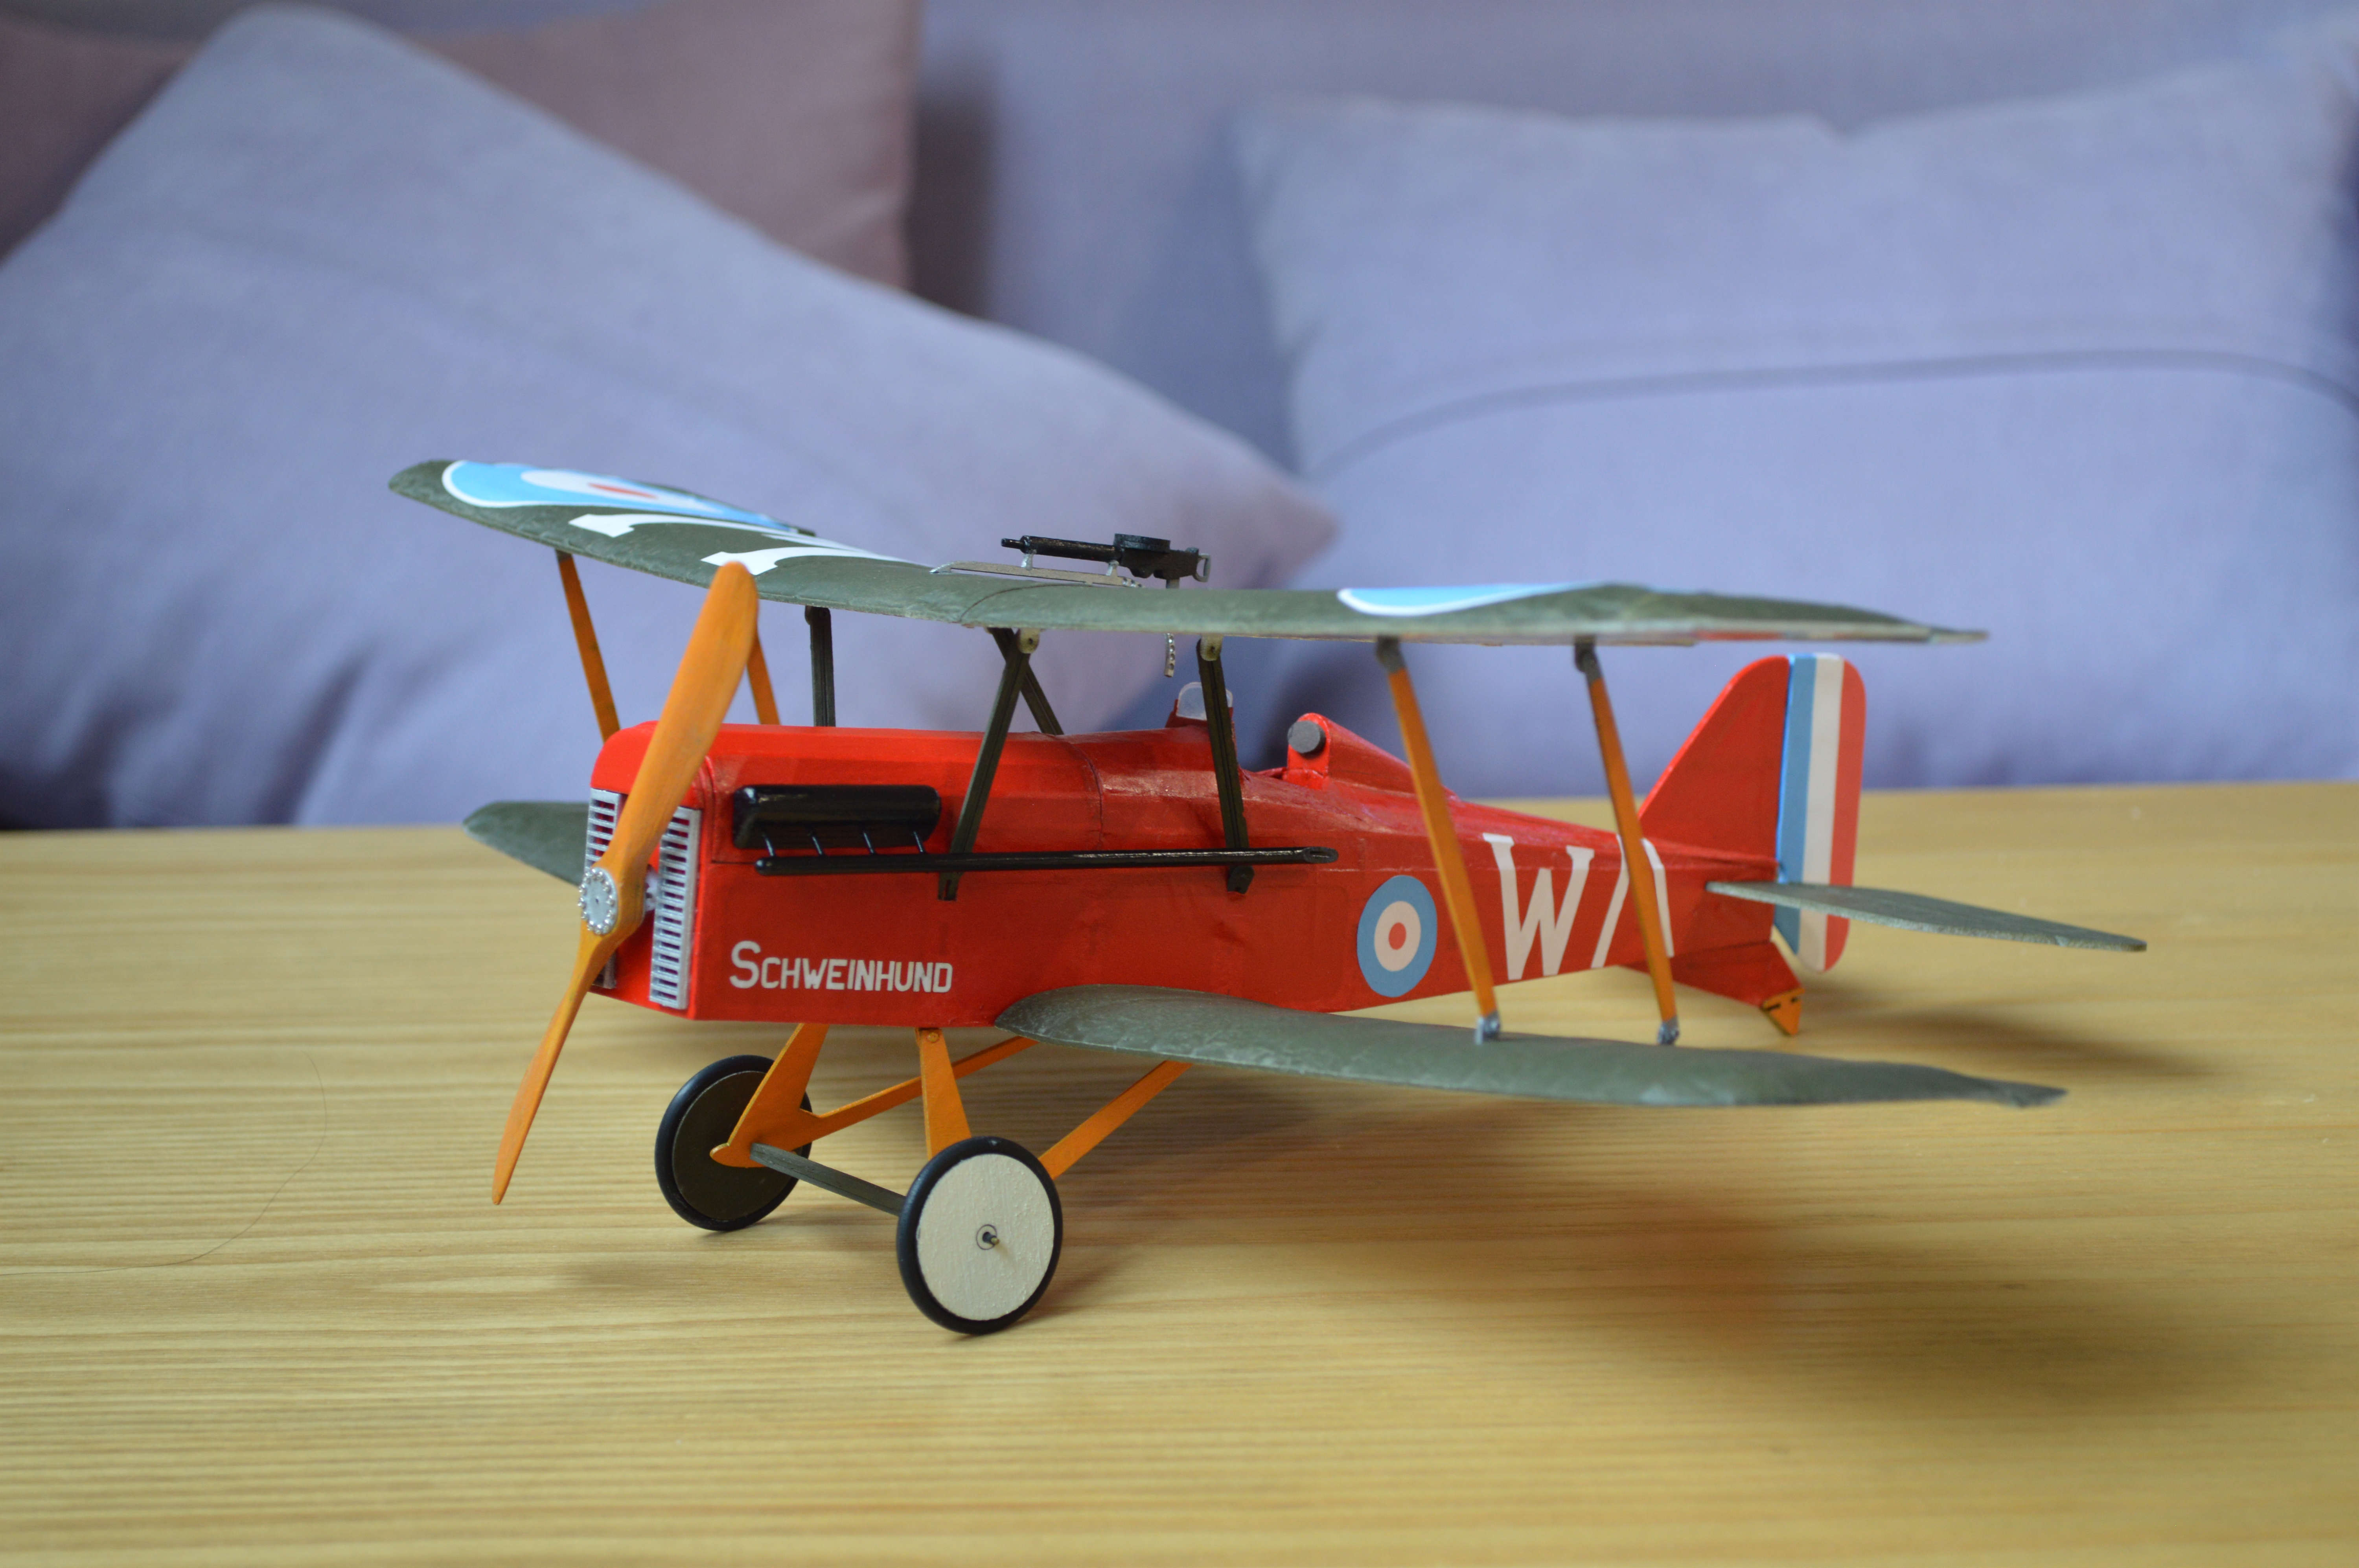 Tony-Rays-AeroModel-RAF-SE5a-480mm-Wingspan-Balsa-Wood-Laser-Cut-Biplane-RC-Airplane-Warbird-KIT-1798680-3